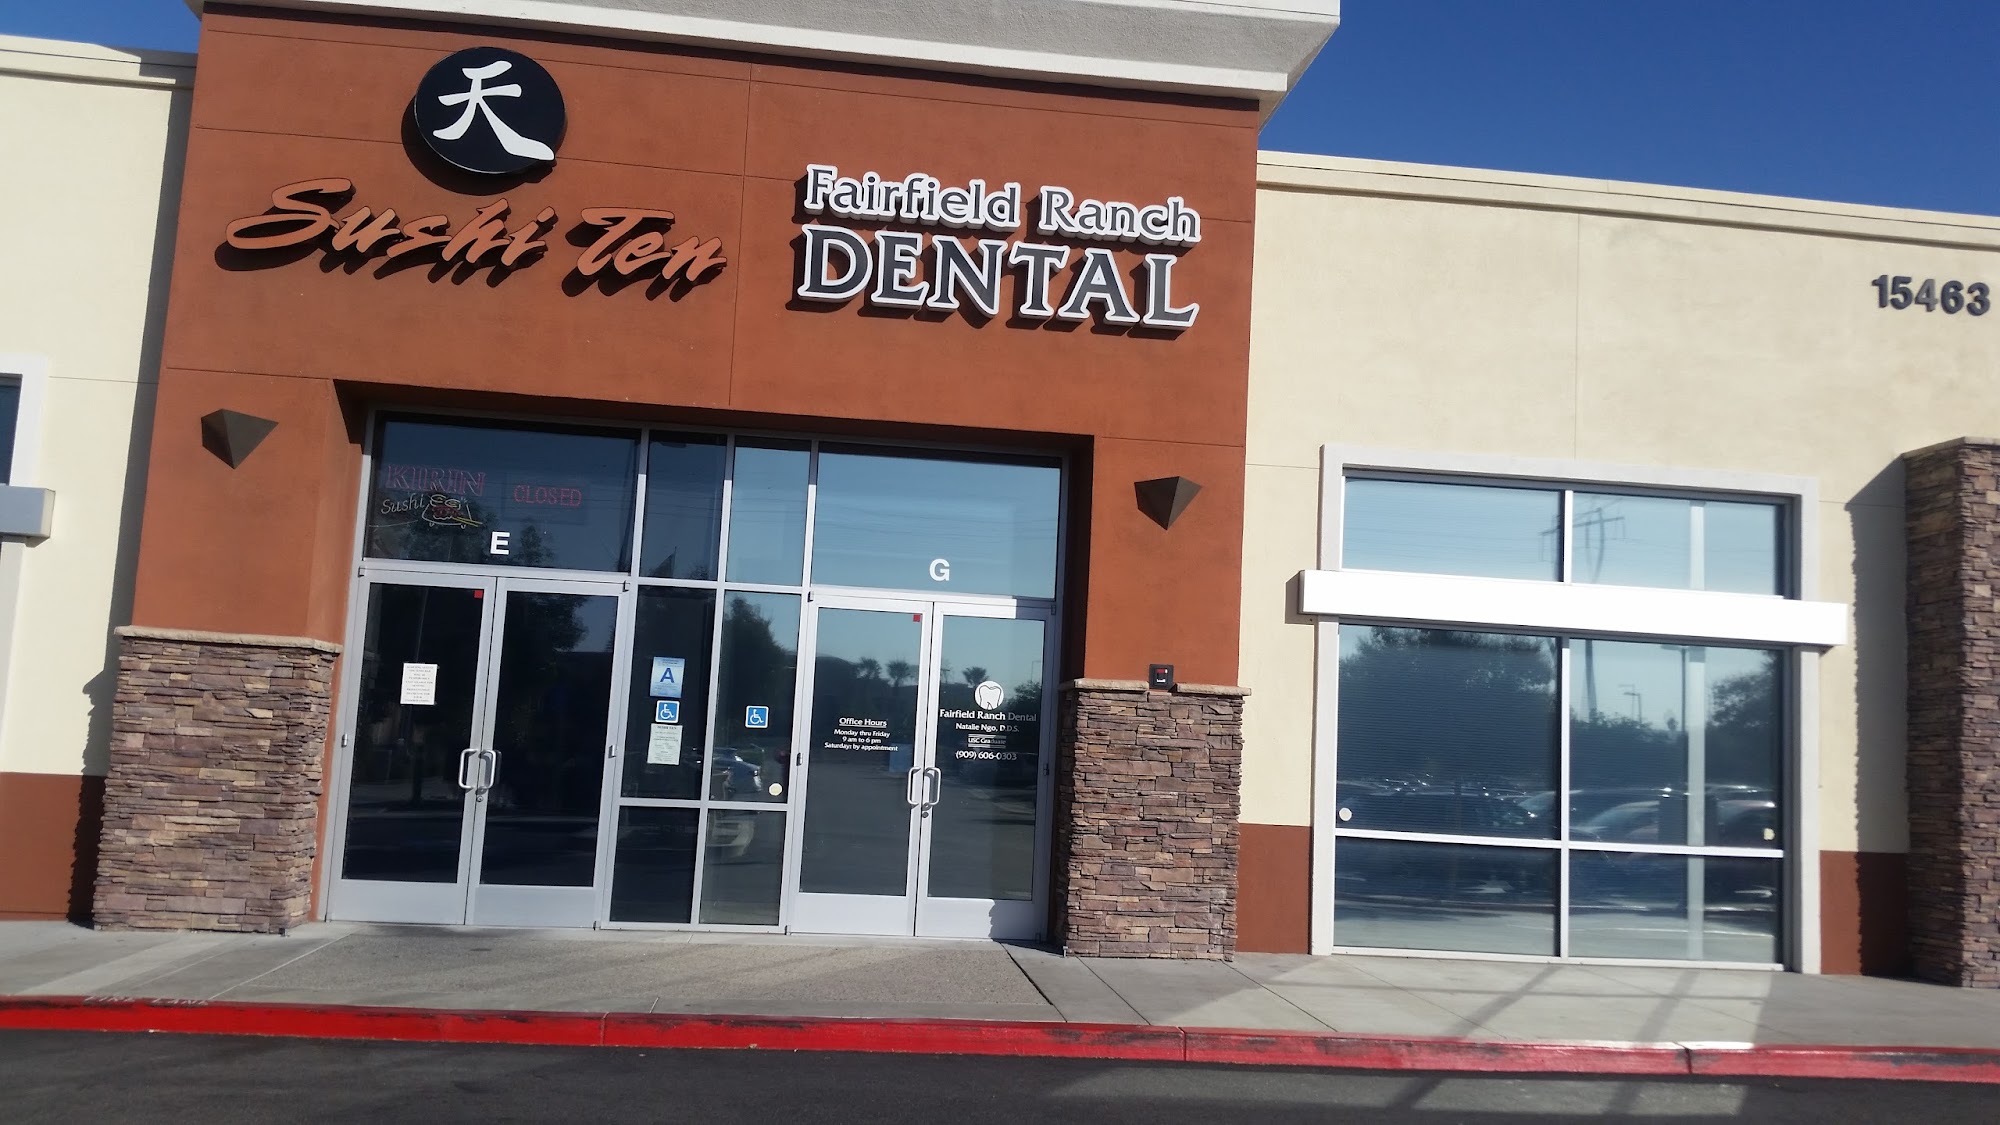 Fairfield Ranch Dental